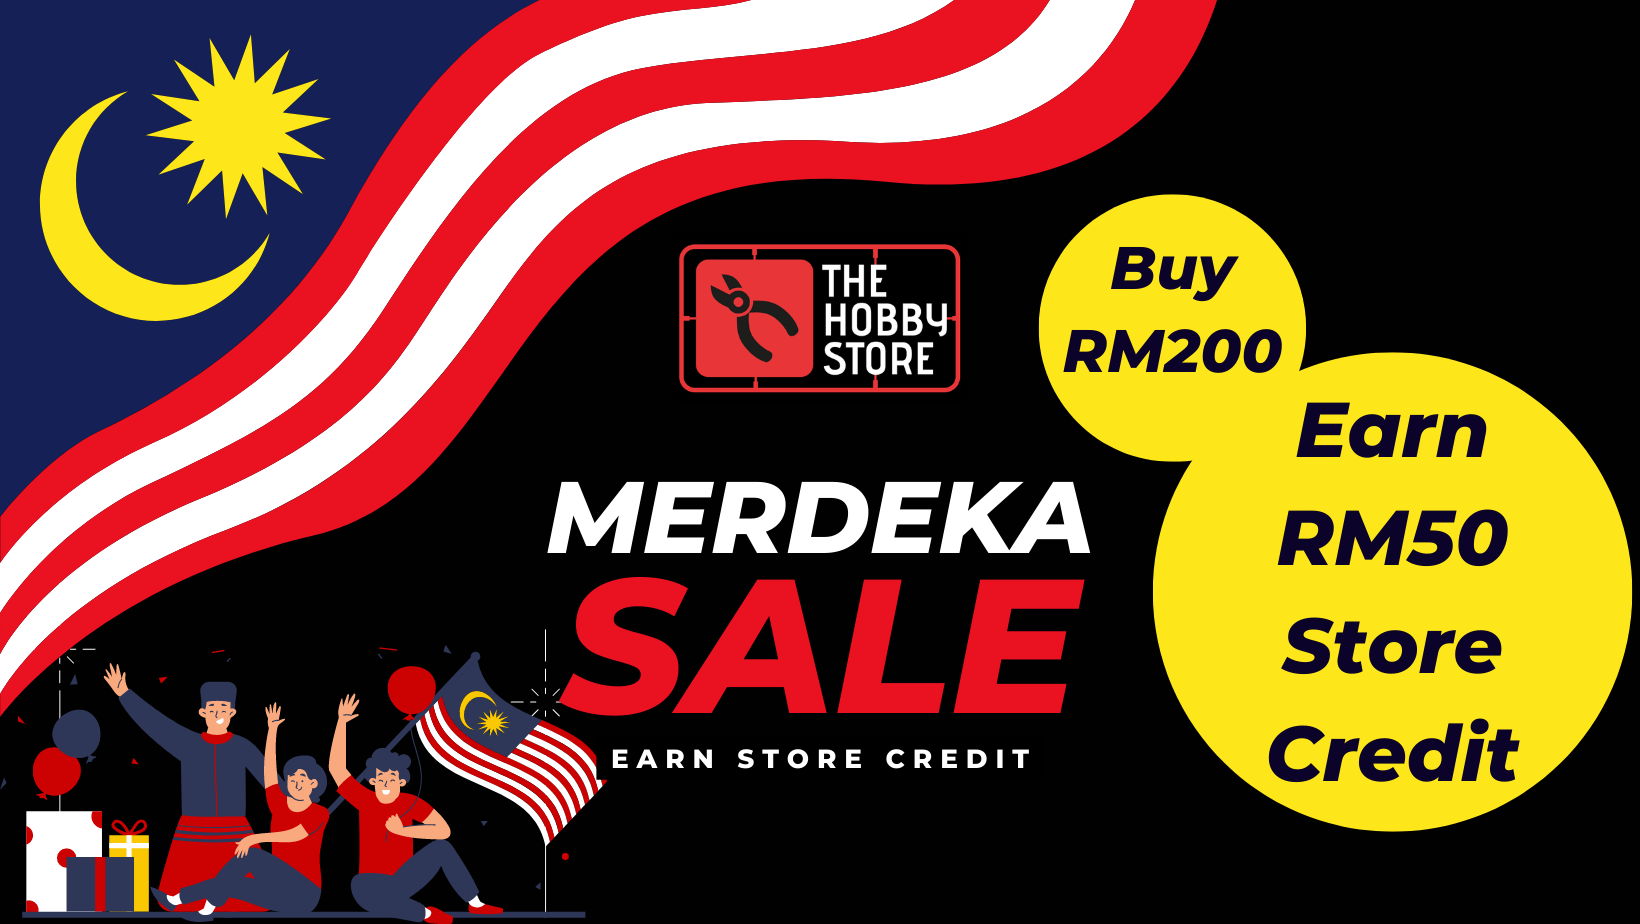 Merdeka Promo - Buy RM200 Free RM50 Store Credit